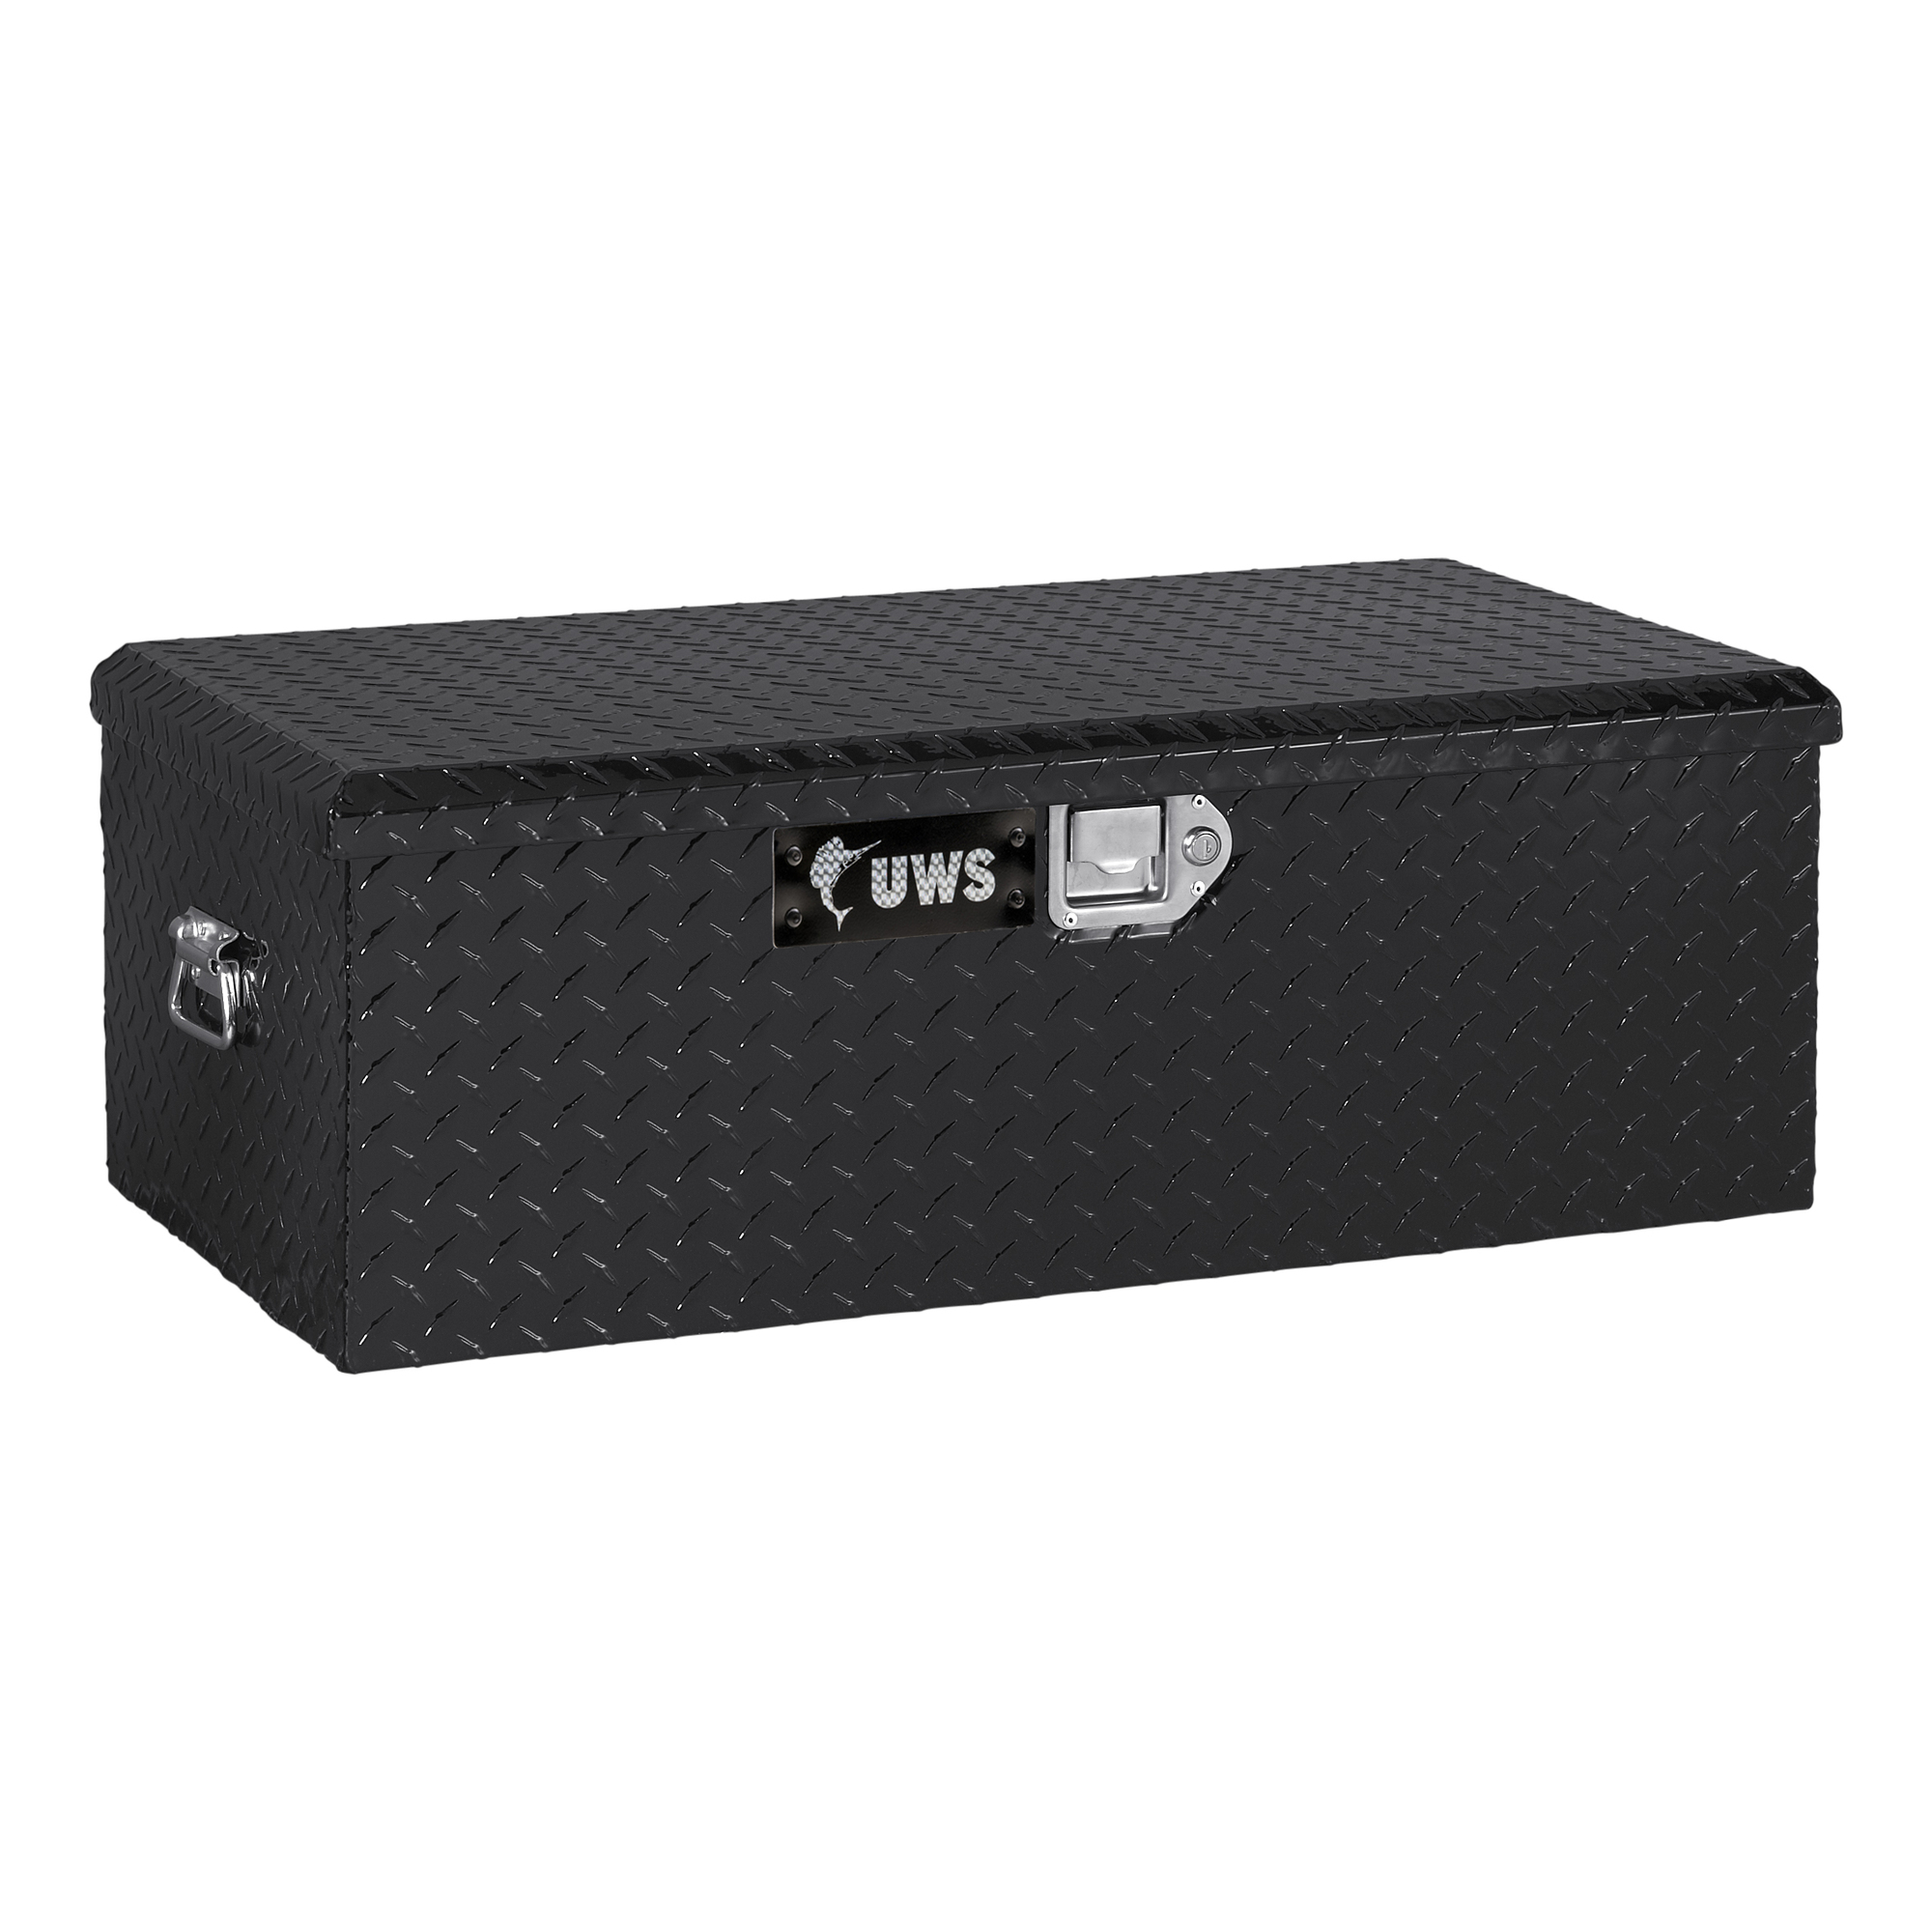 UWS, 36Inch Foot Locker, Width 35.875 in, Material Aluminum, Color Finish Gloss Black, Model EC20072